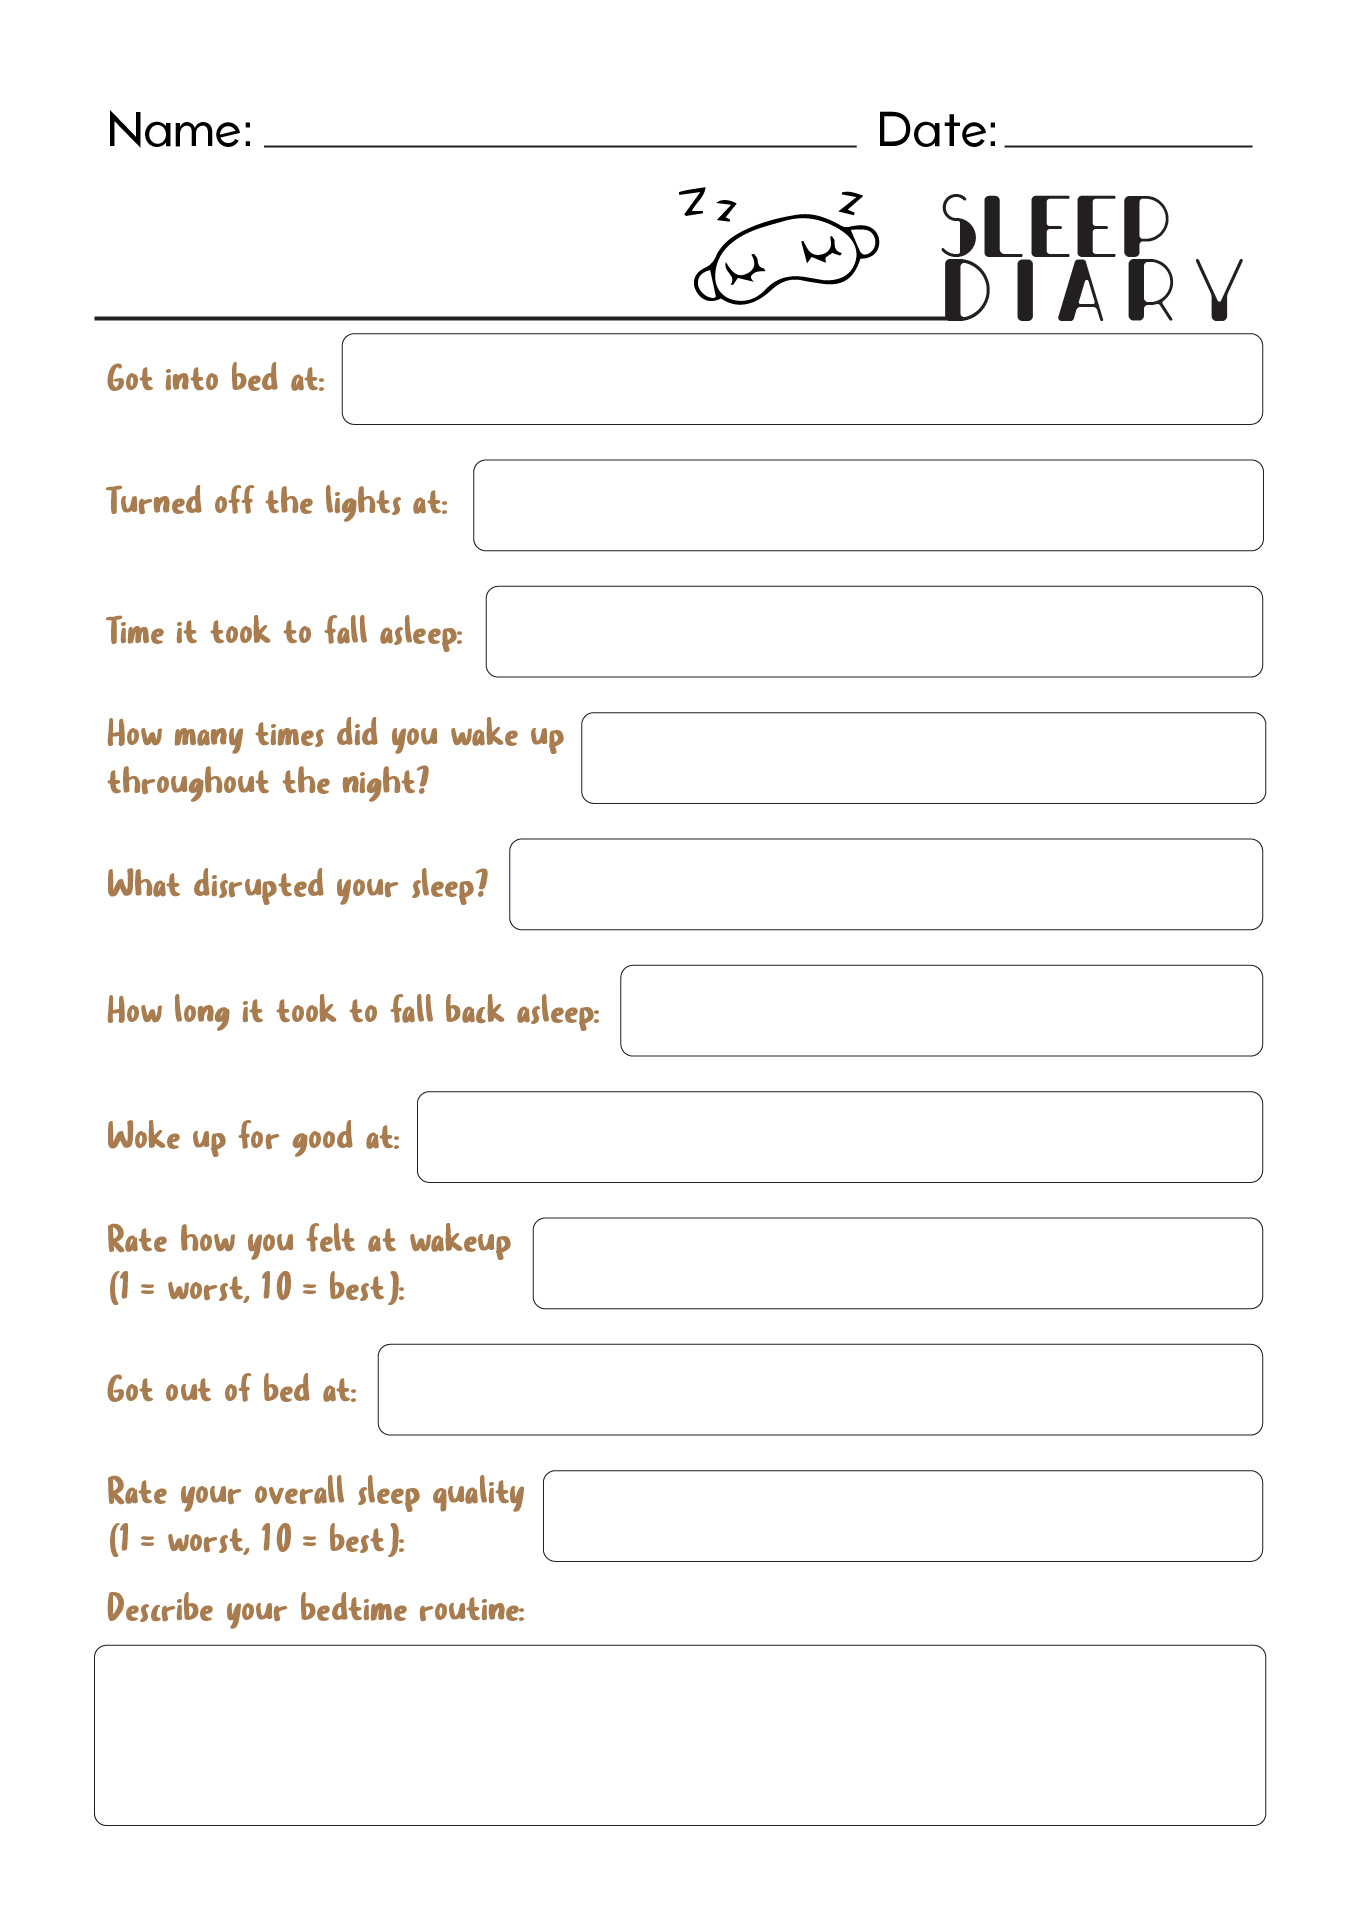 Free Printable Sleep Diary Template - Printable Templates